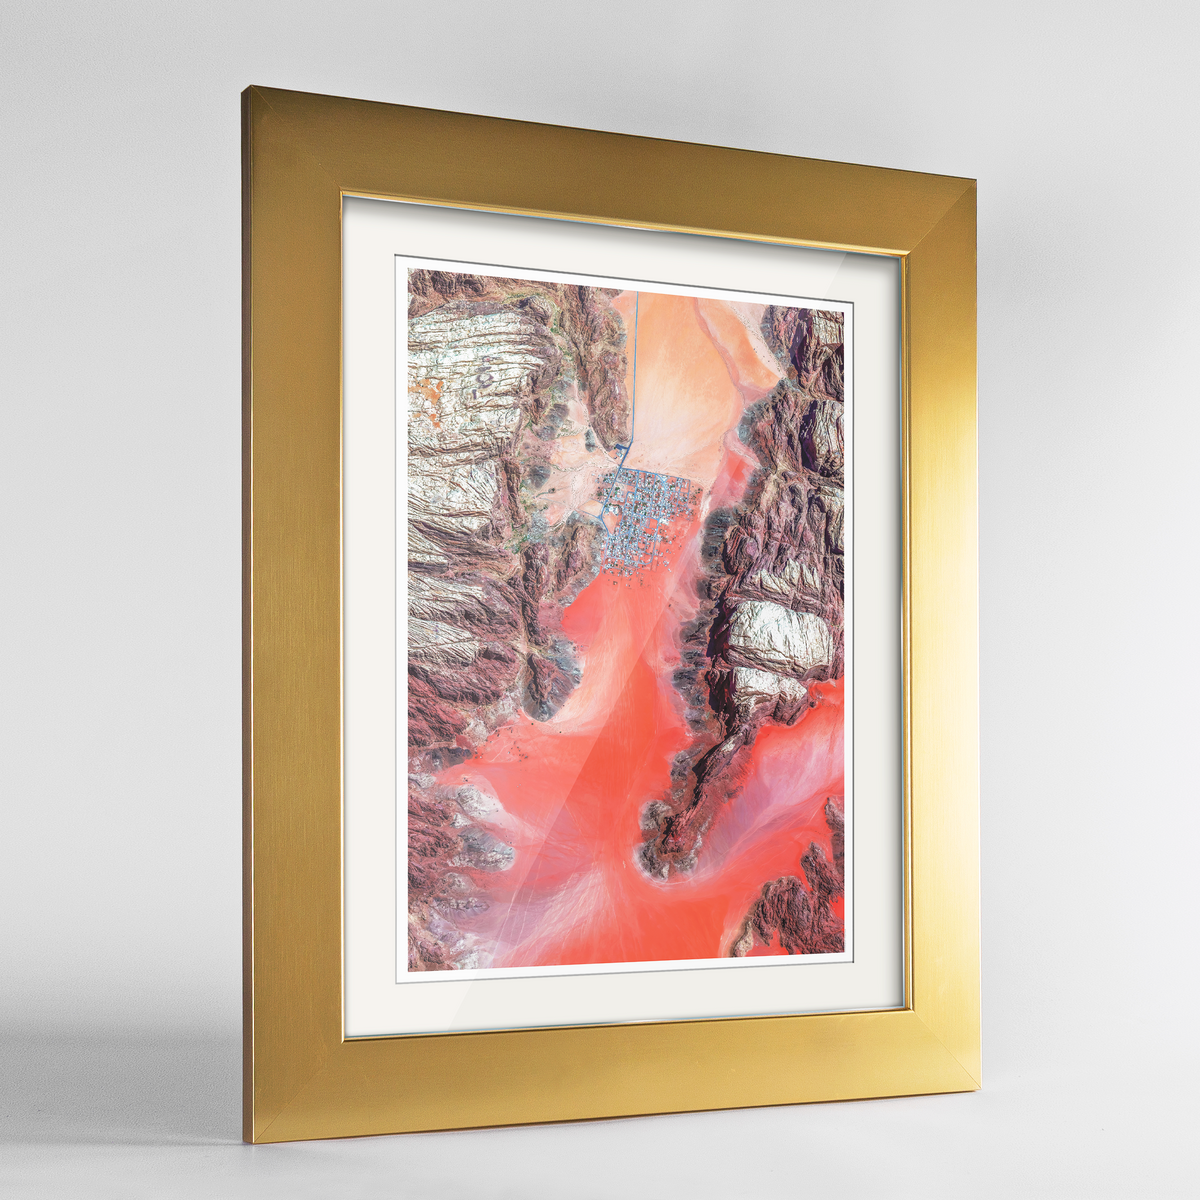 Wadi Rum Earth Photography Art Print - Framed